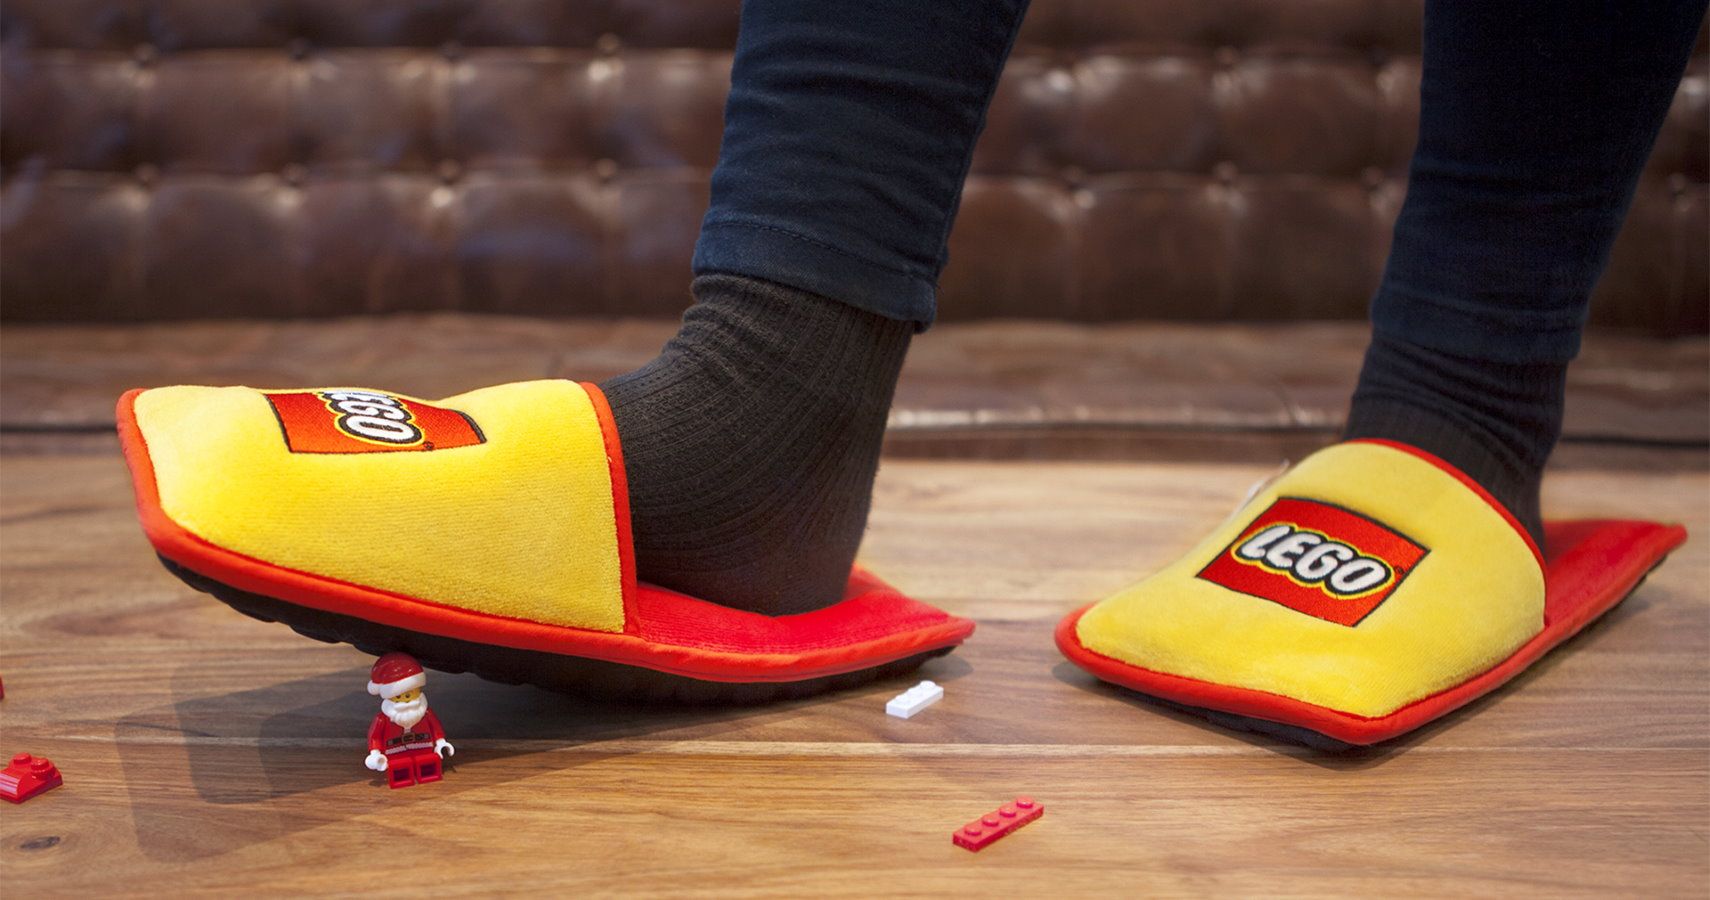 Lego slippers by Brandstation